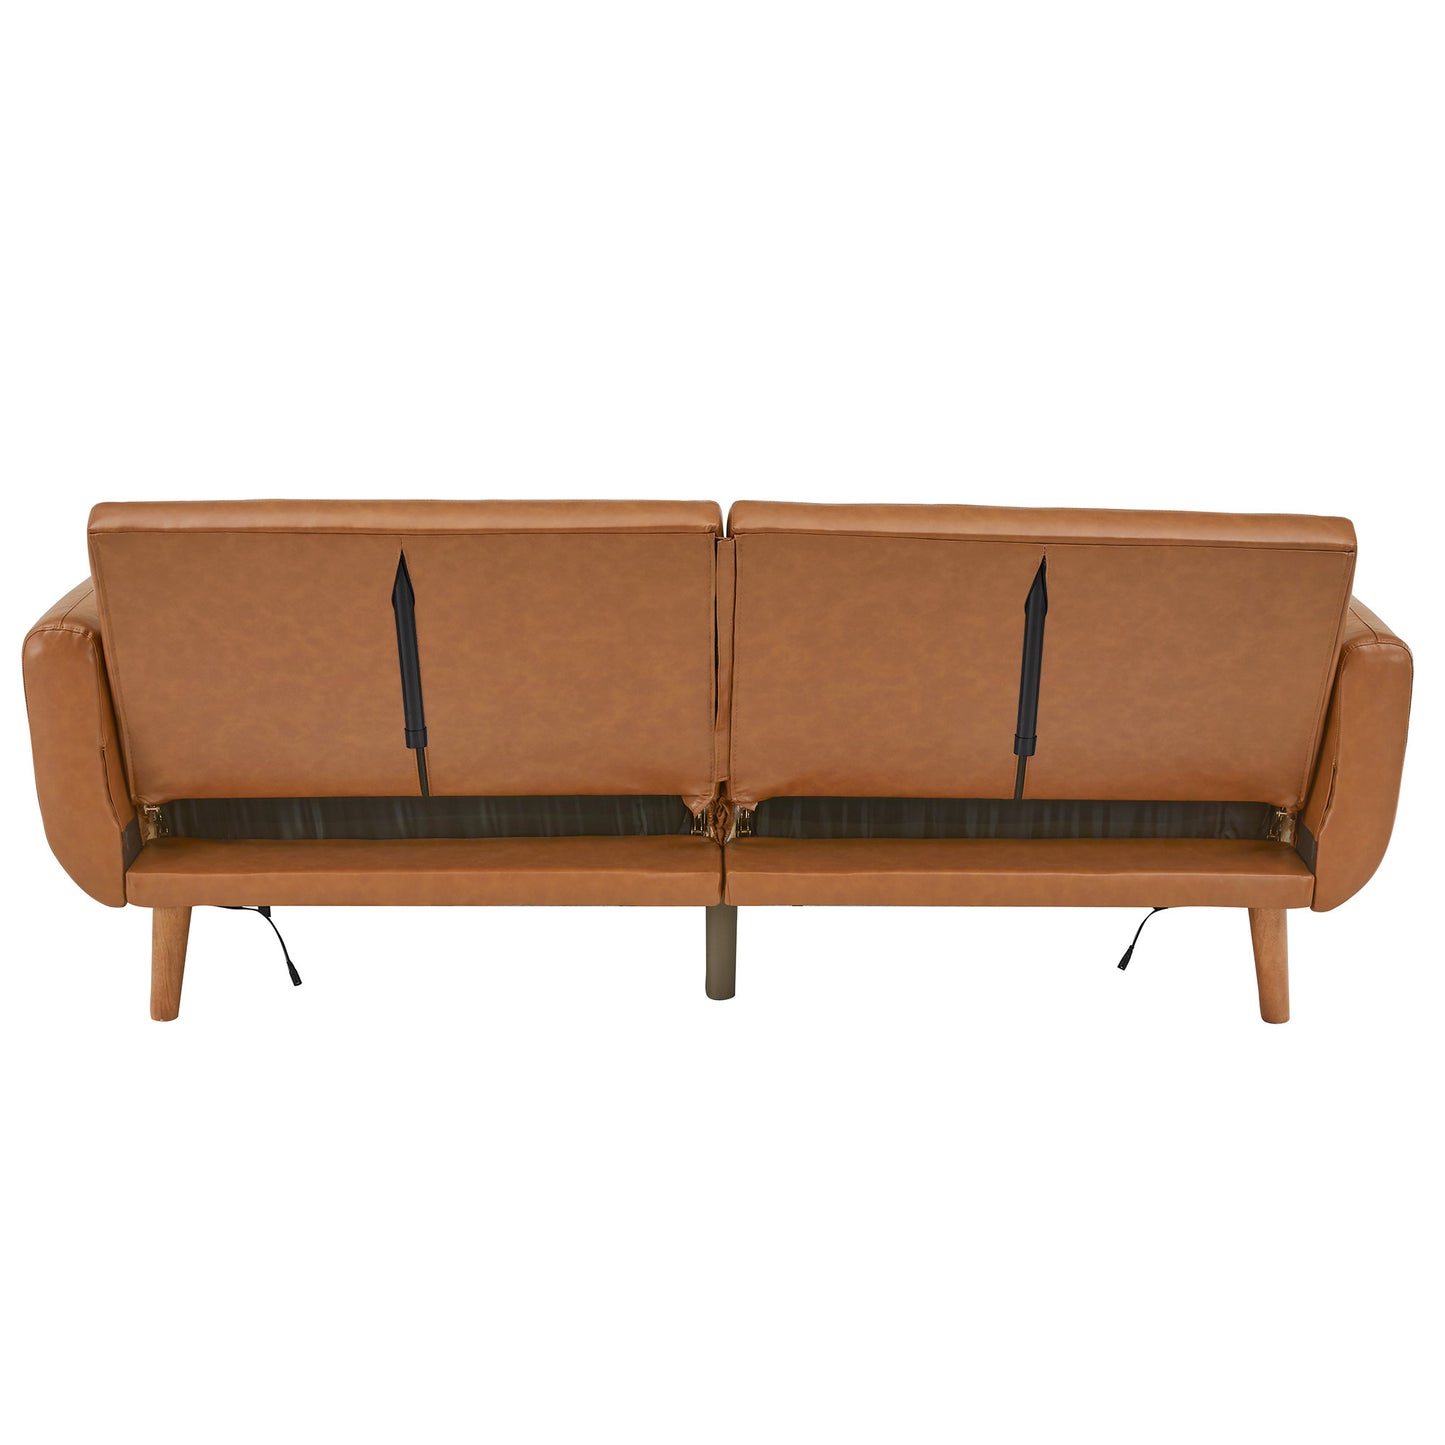 Upholstered Convertible Split-Back Futon Sofa Bed with USB Charging Ports - Caramel Vegan Leather